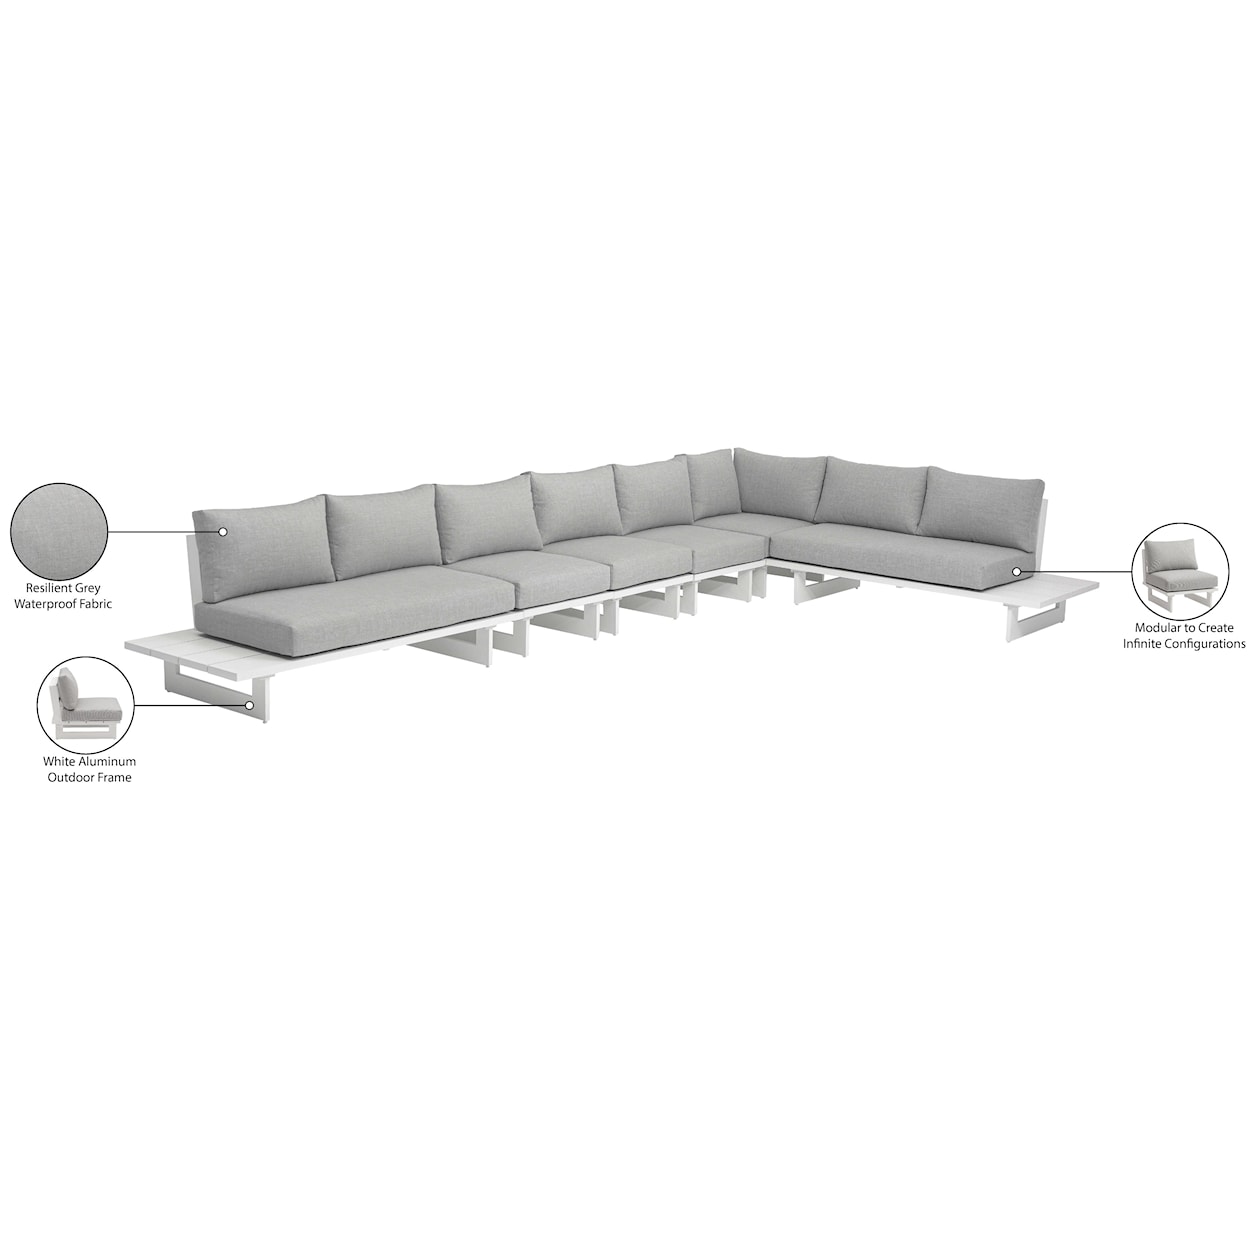 Meridian Furniture Maldives Modular Sectional